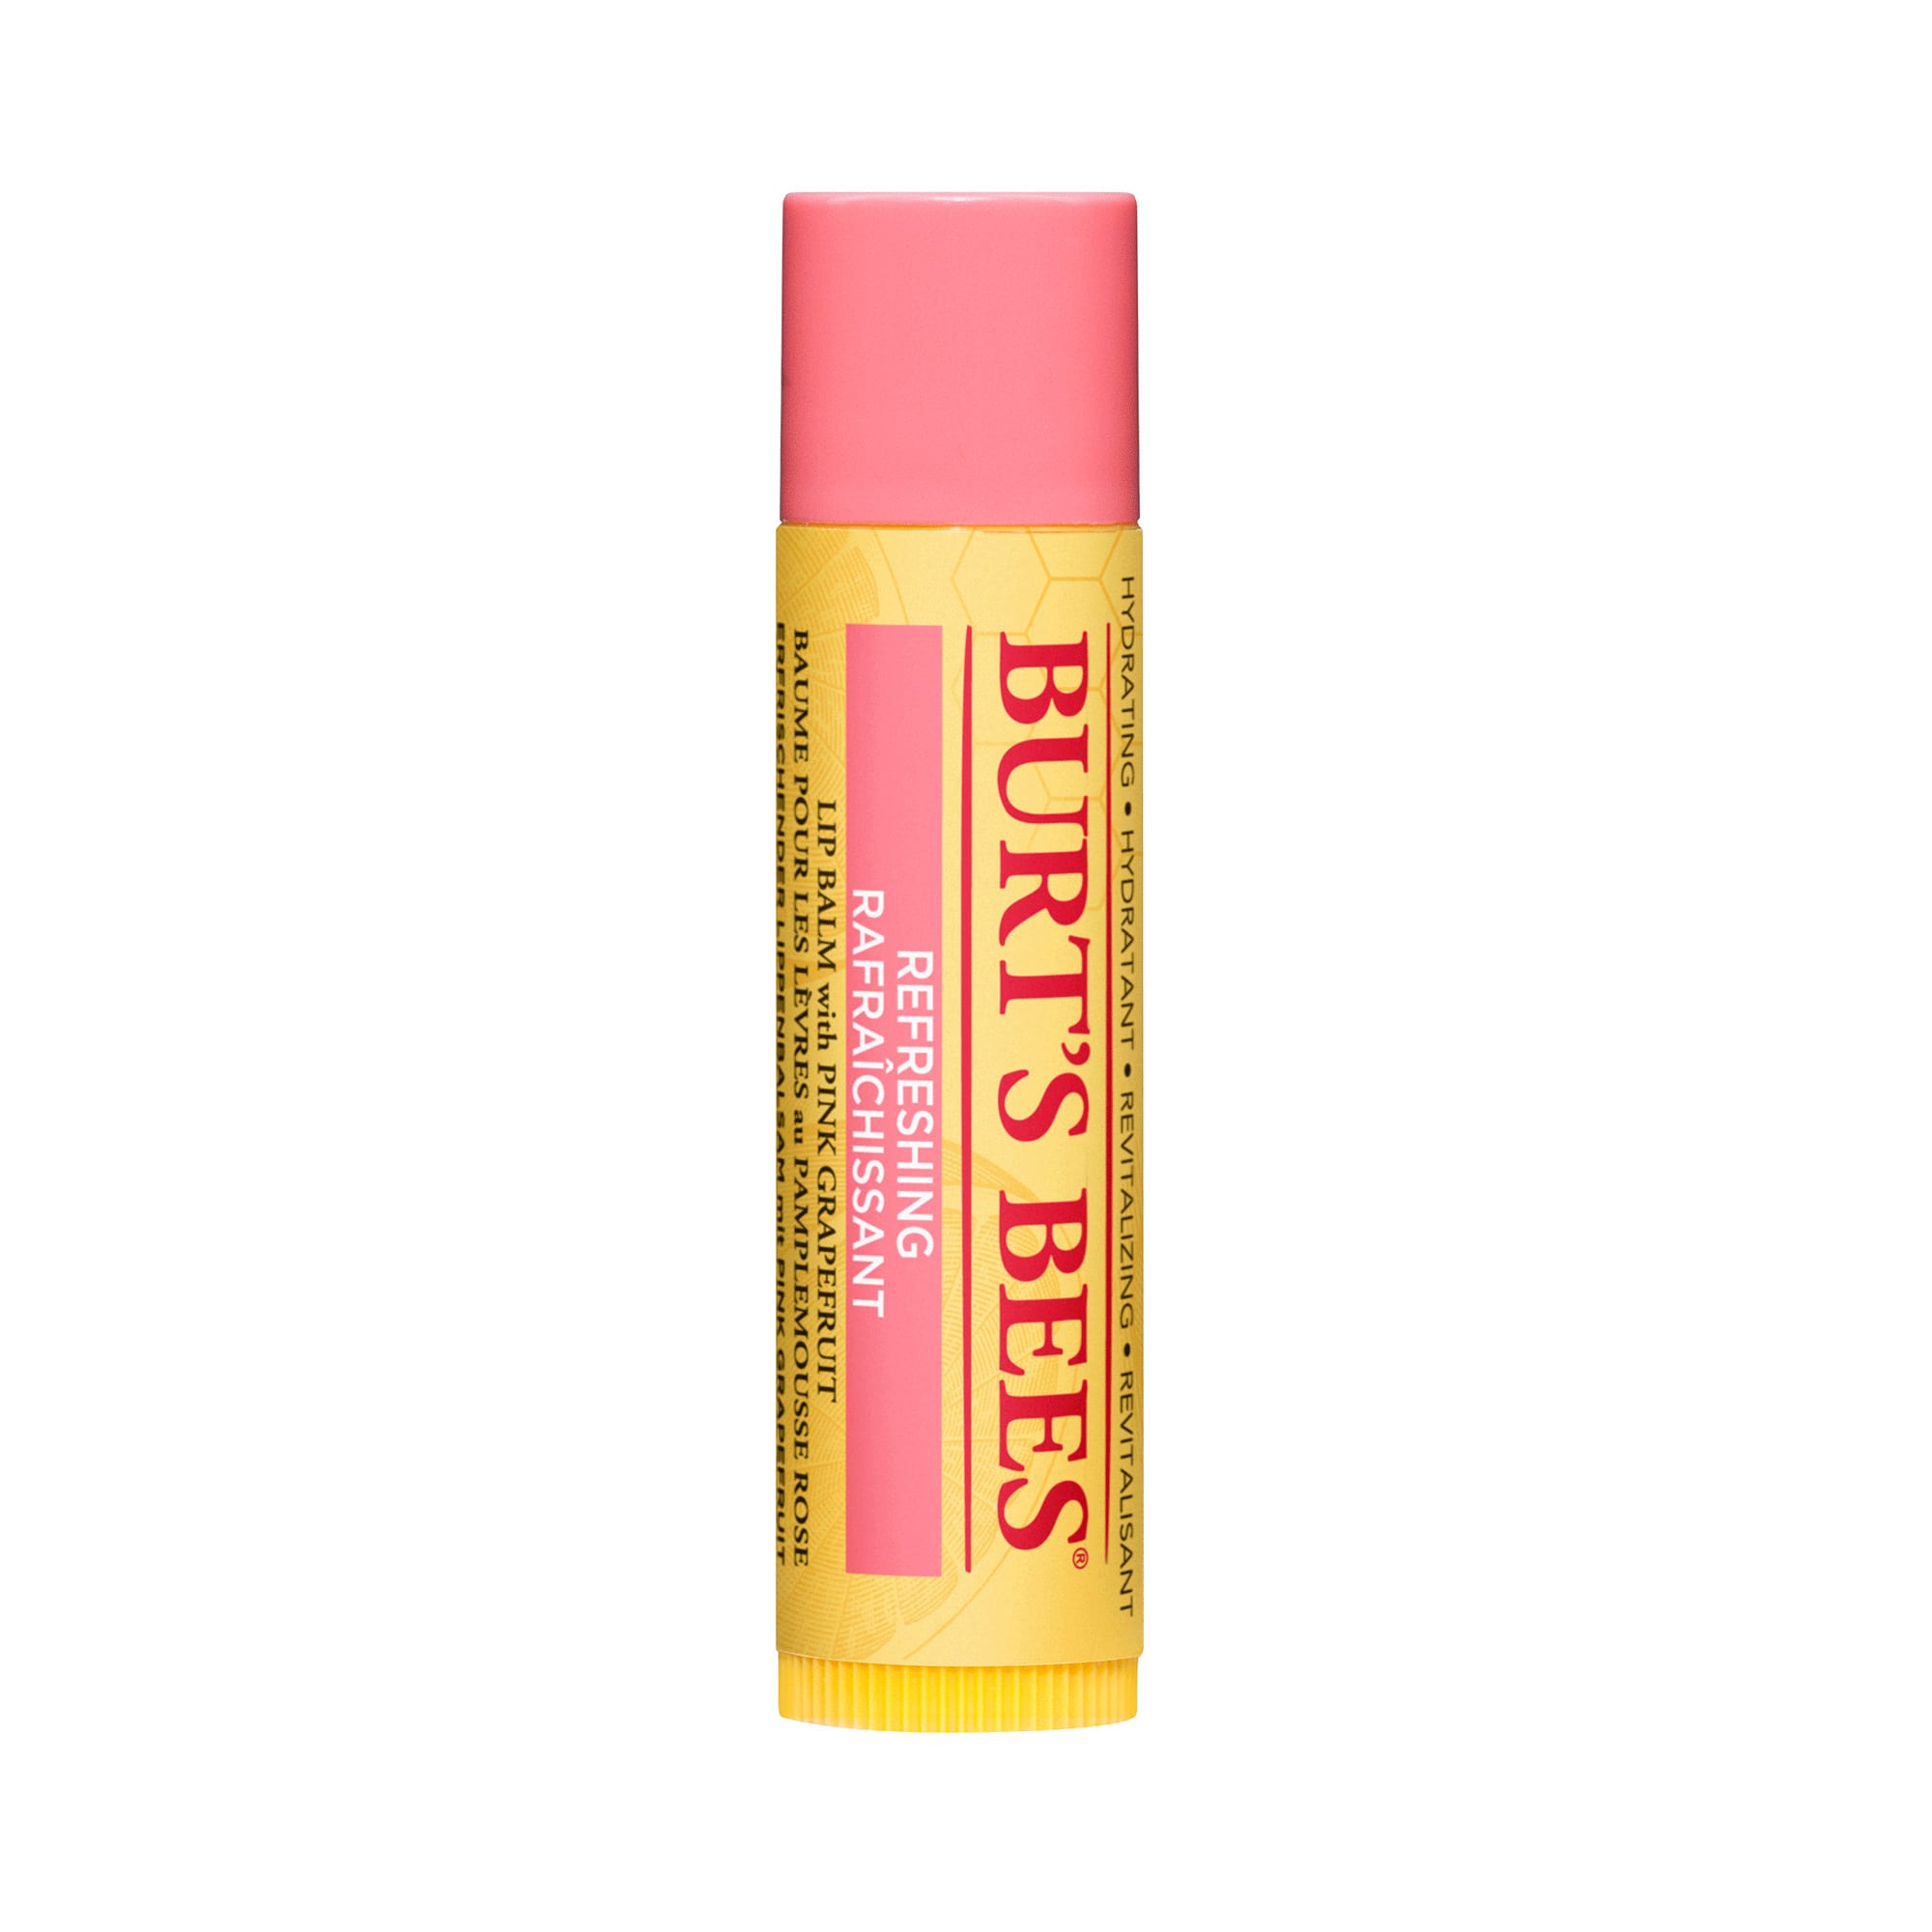 Beeswax Lip Balm från Burt's Bees